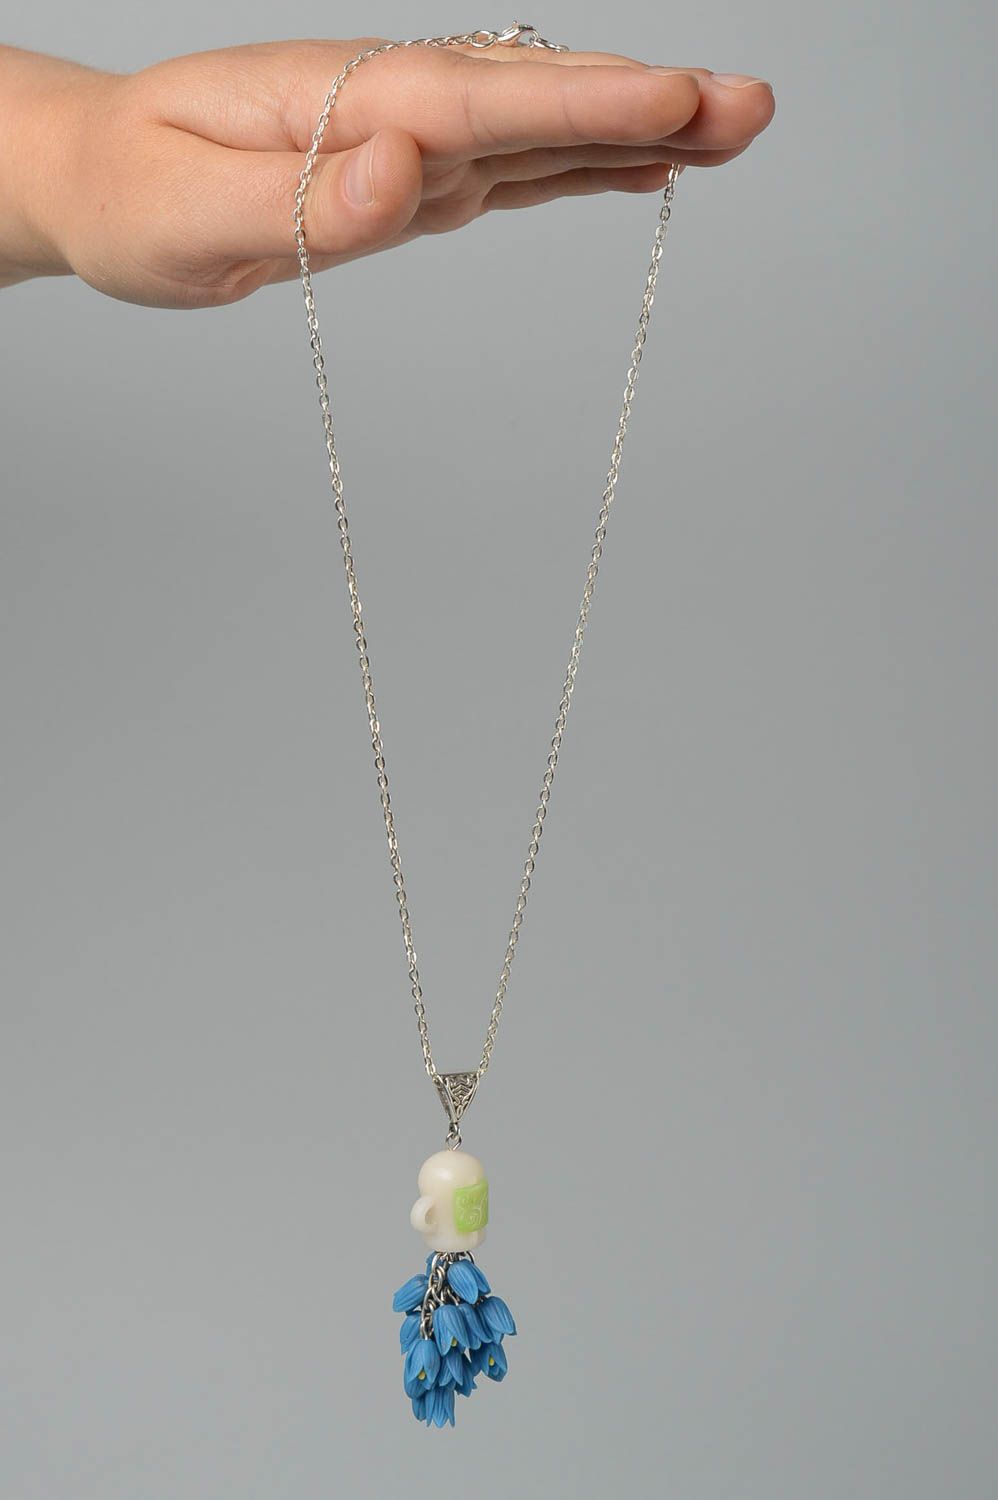 Flower pendant handmade jewelry polymer clay pendant plastic jewelry for women photo 5